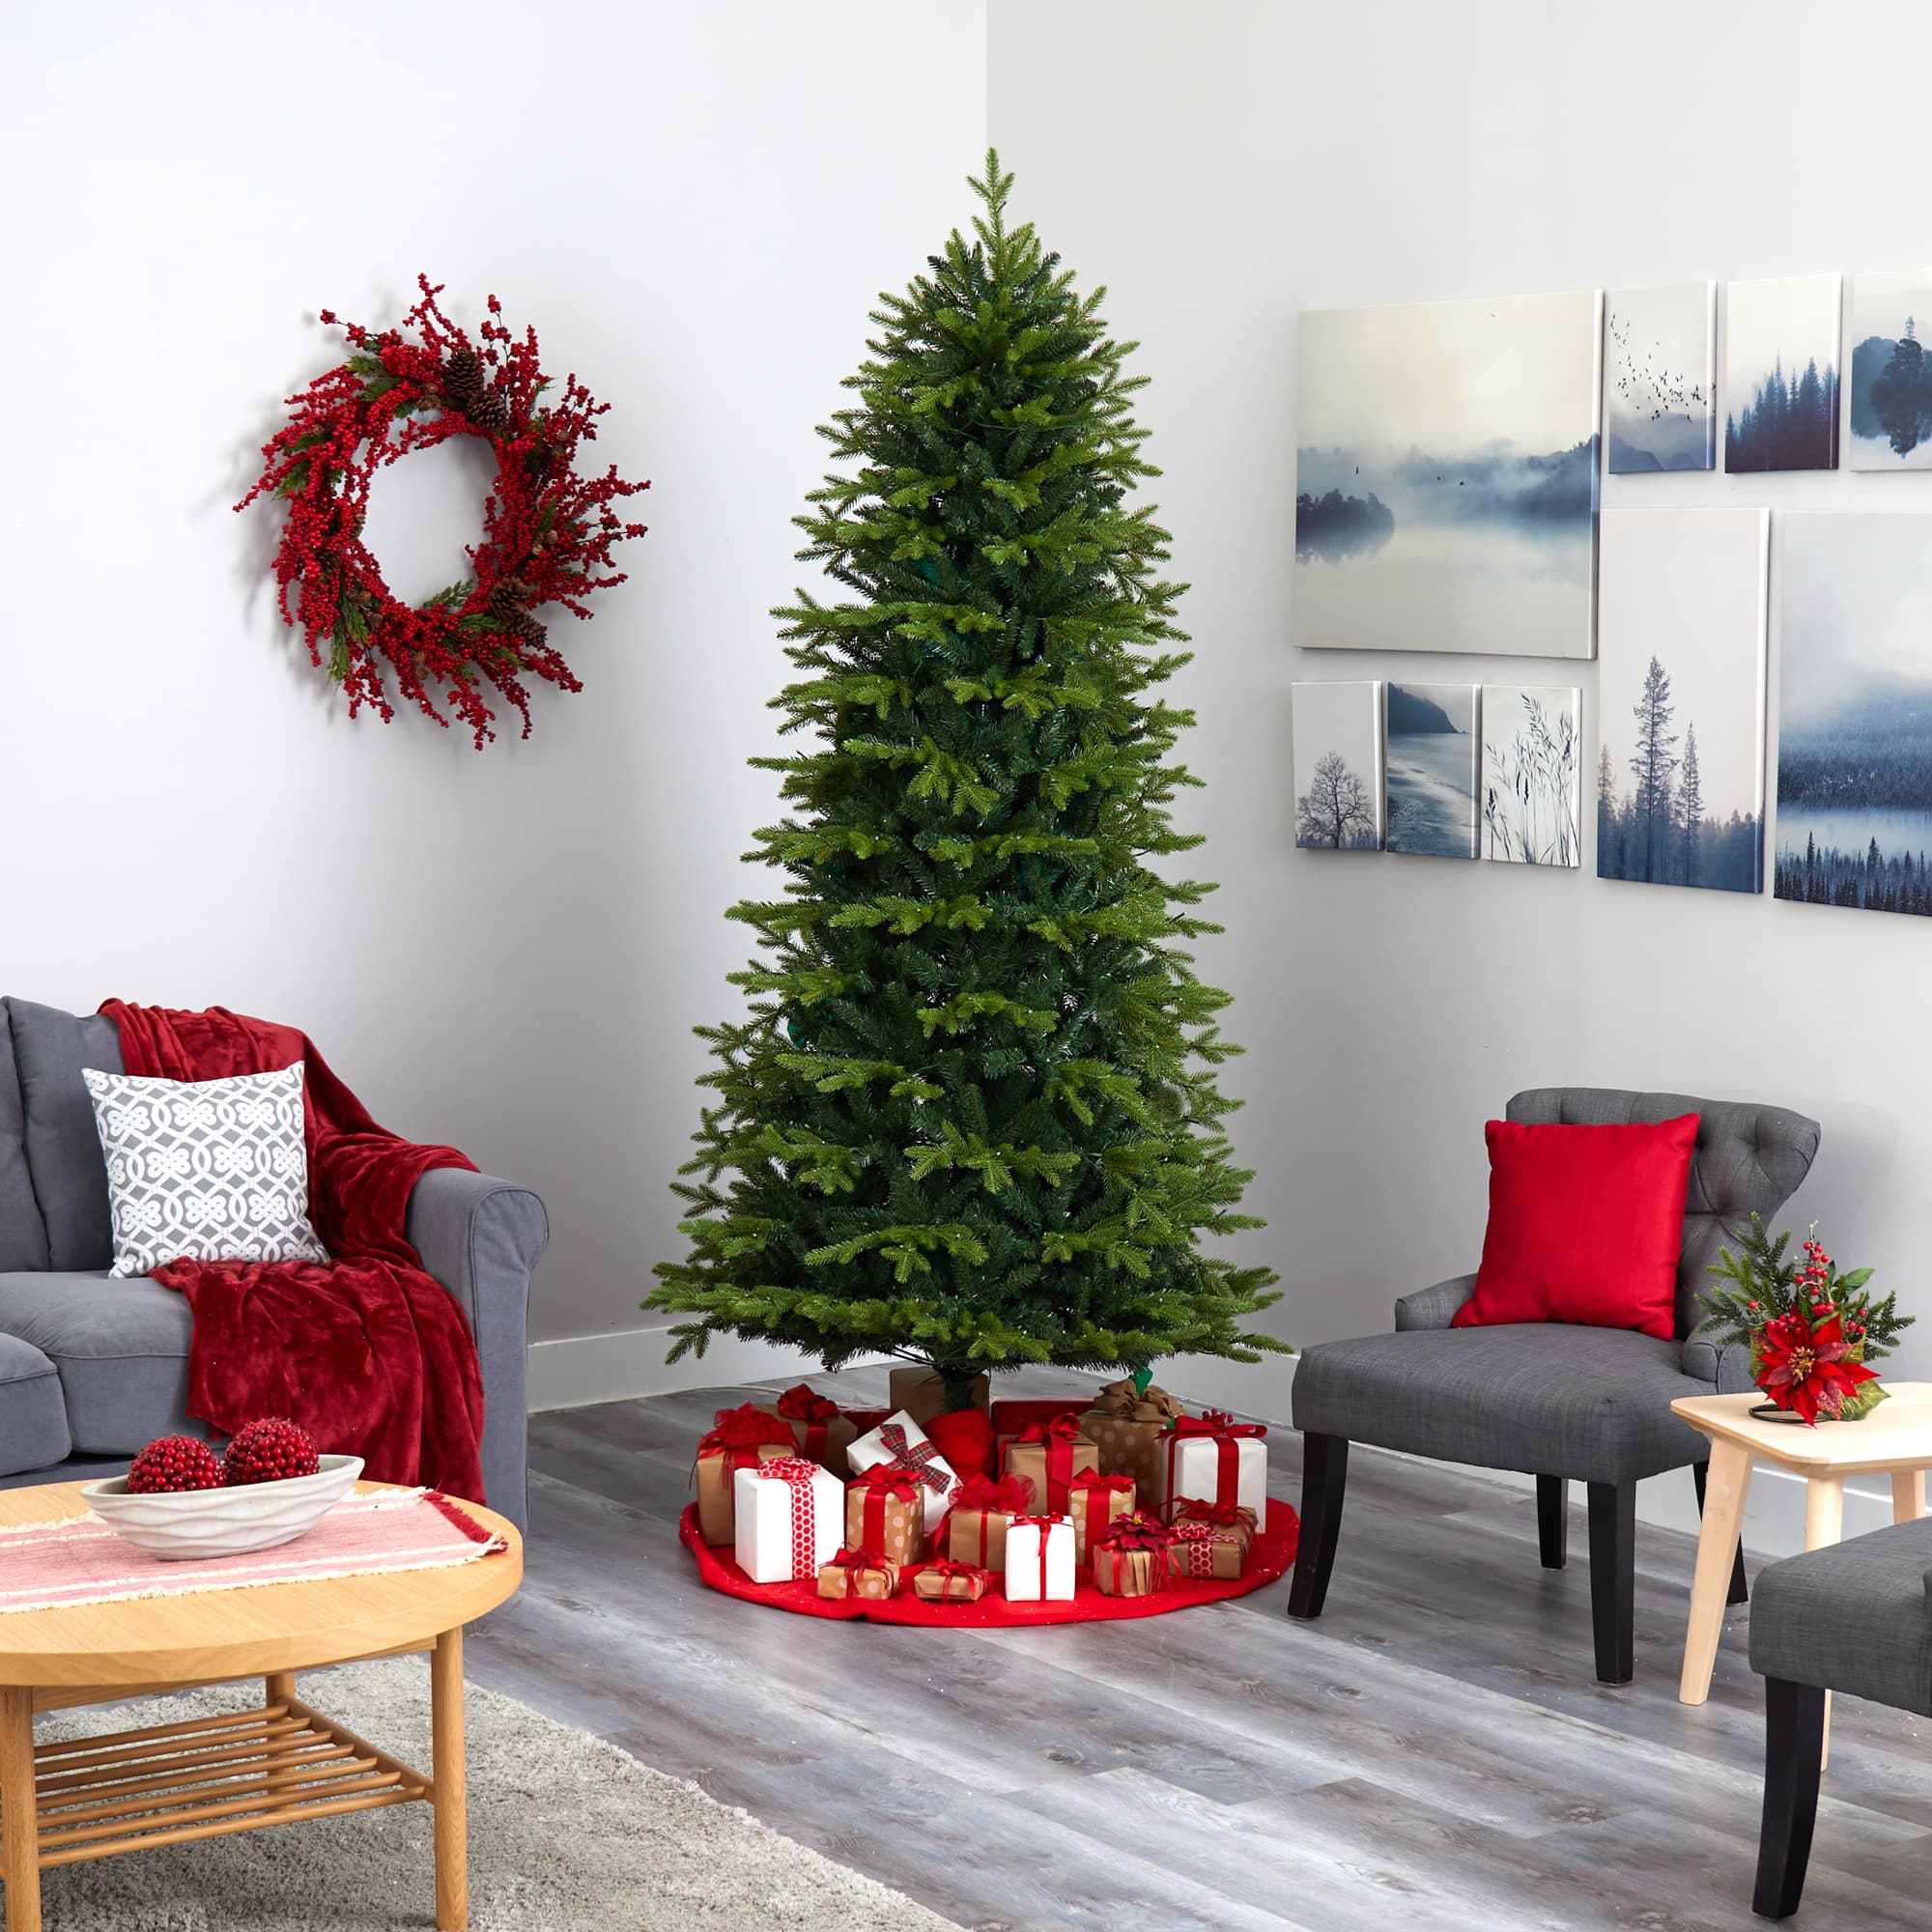 8ft. Pre-Lit Belgium Fir Artificial Christmas Tree, Clear LED Lights